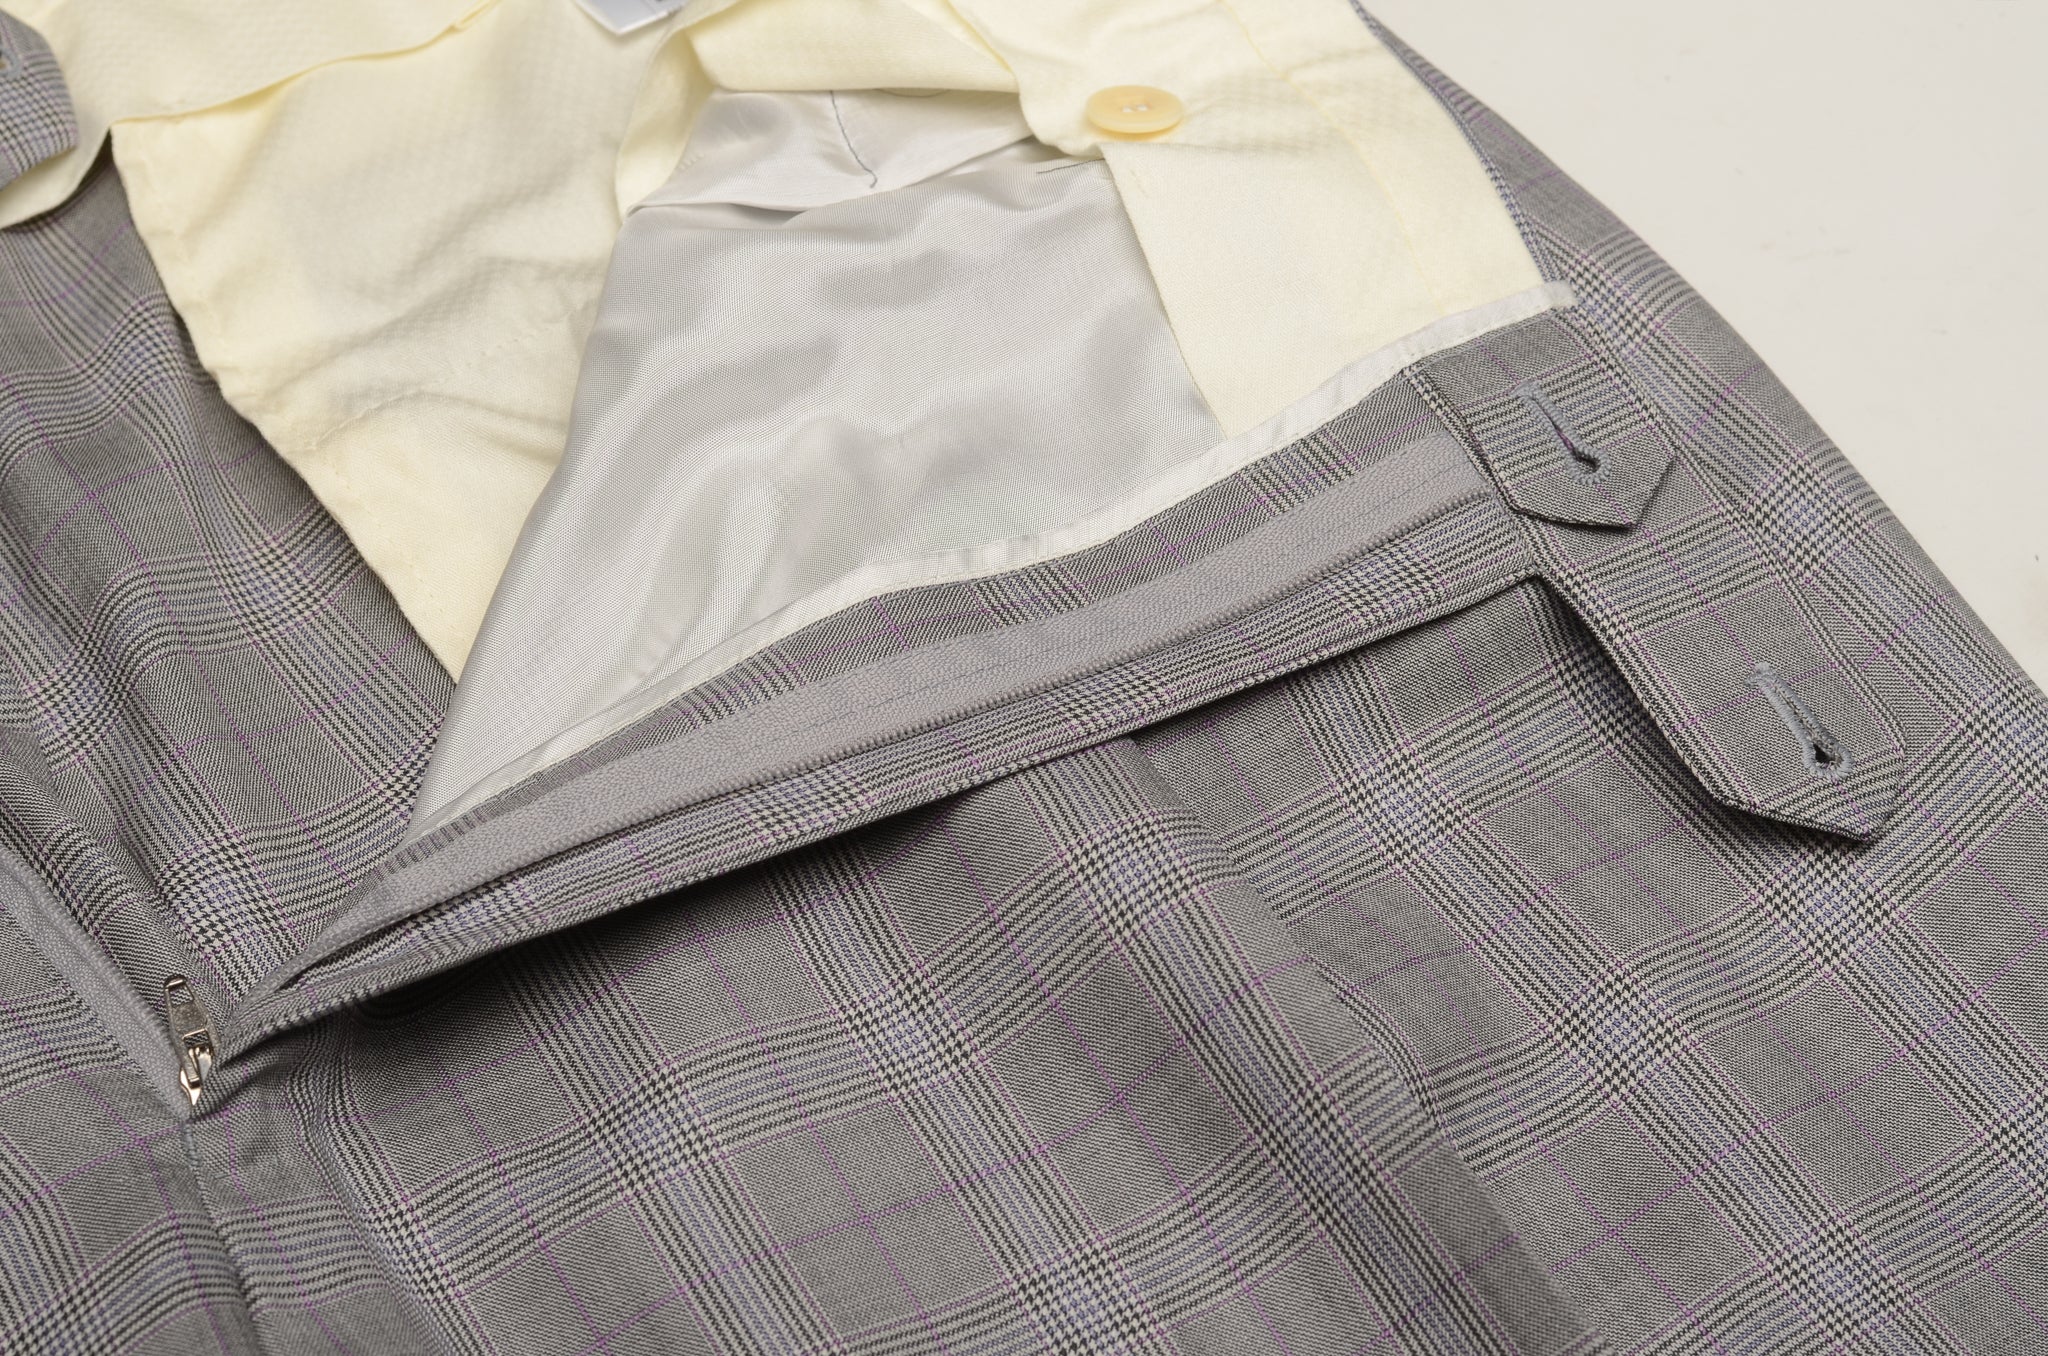 D'AVENZA Handmade Gray Cashmere Silk Suit EU 60 NEW US 50 Short D'AVENZA